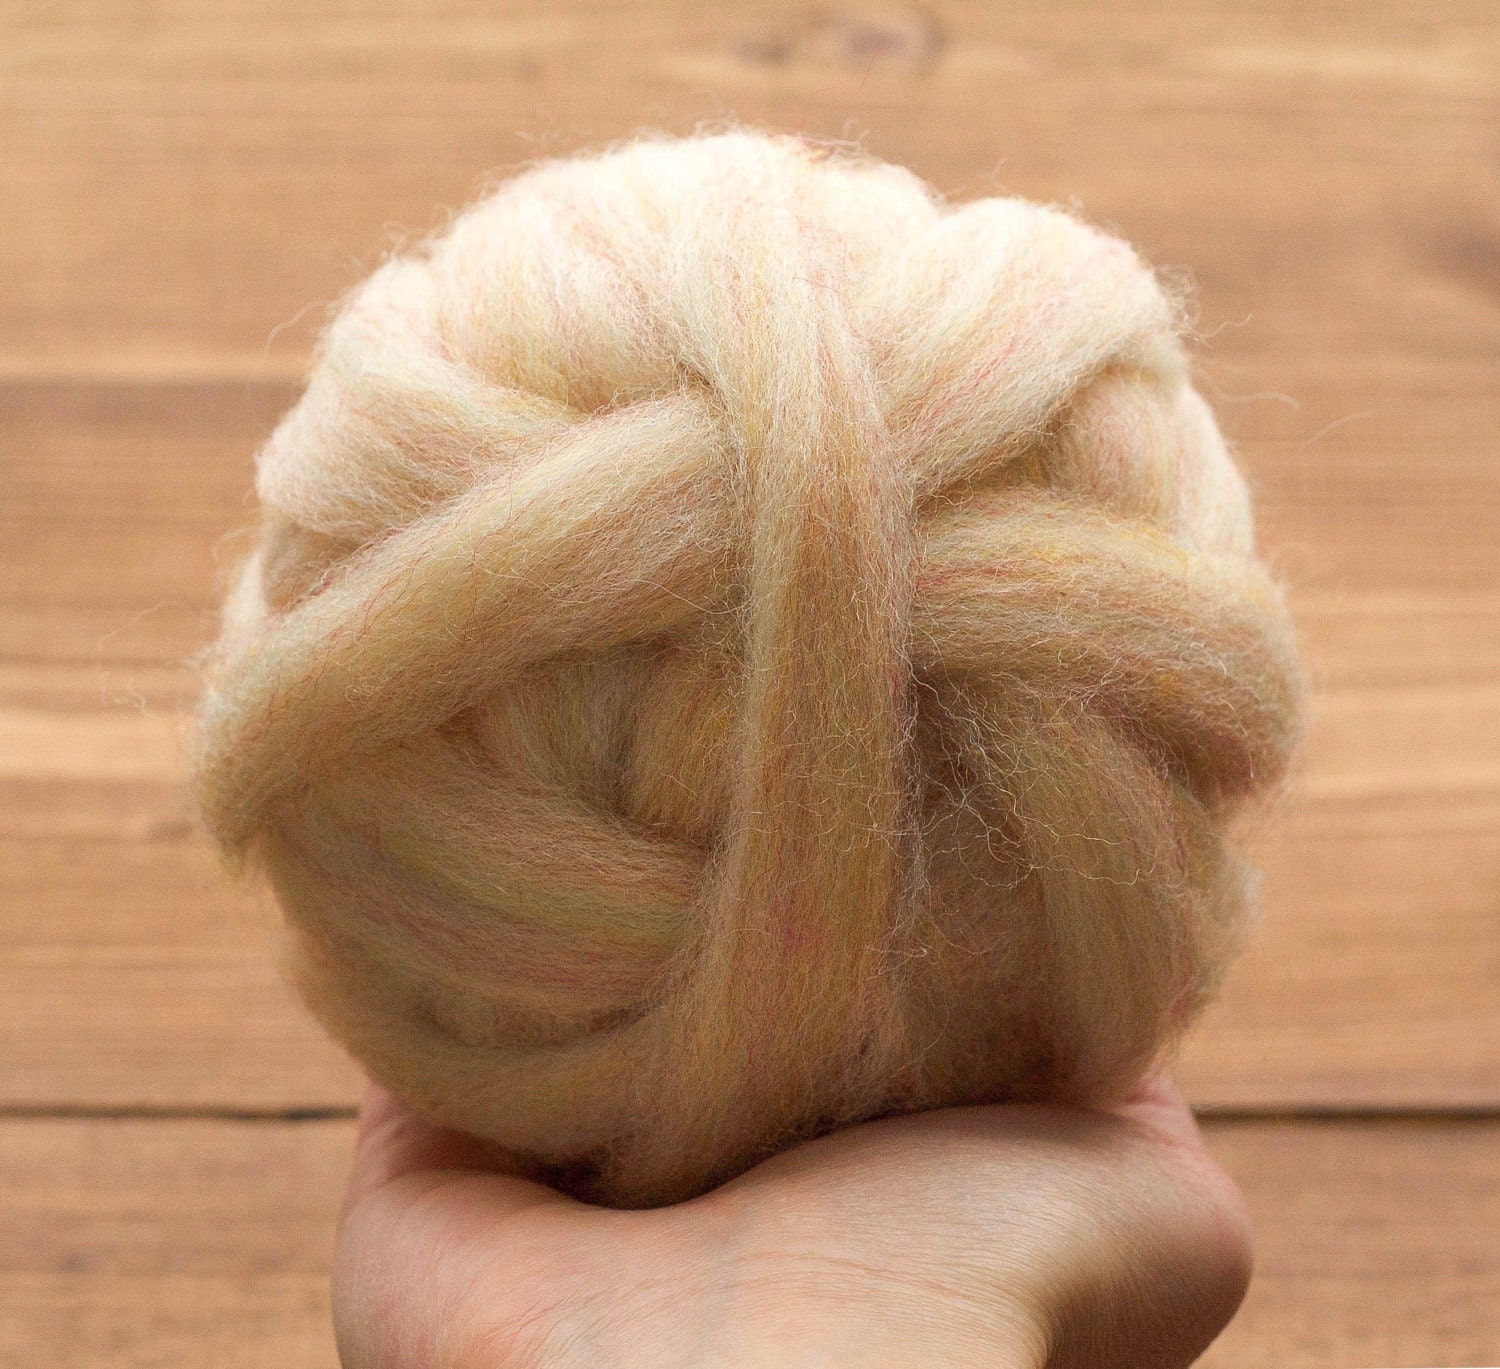 Wool Roving for Needle Felting in Celadon Green, Spring Green, Pastel,  Light Green, Wet Felting, Spinning, Chunky Yarn, DIY